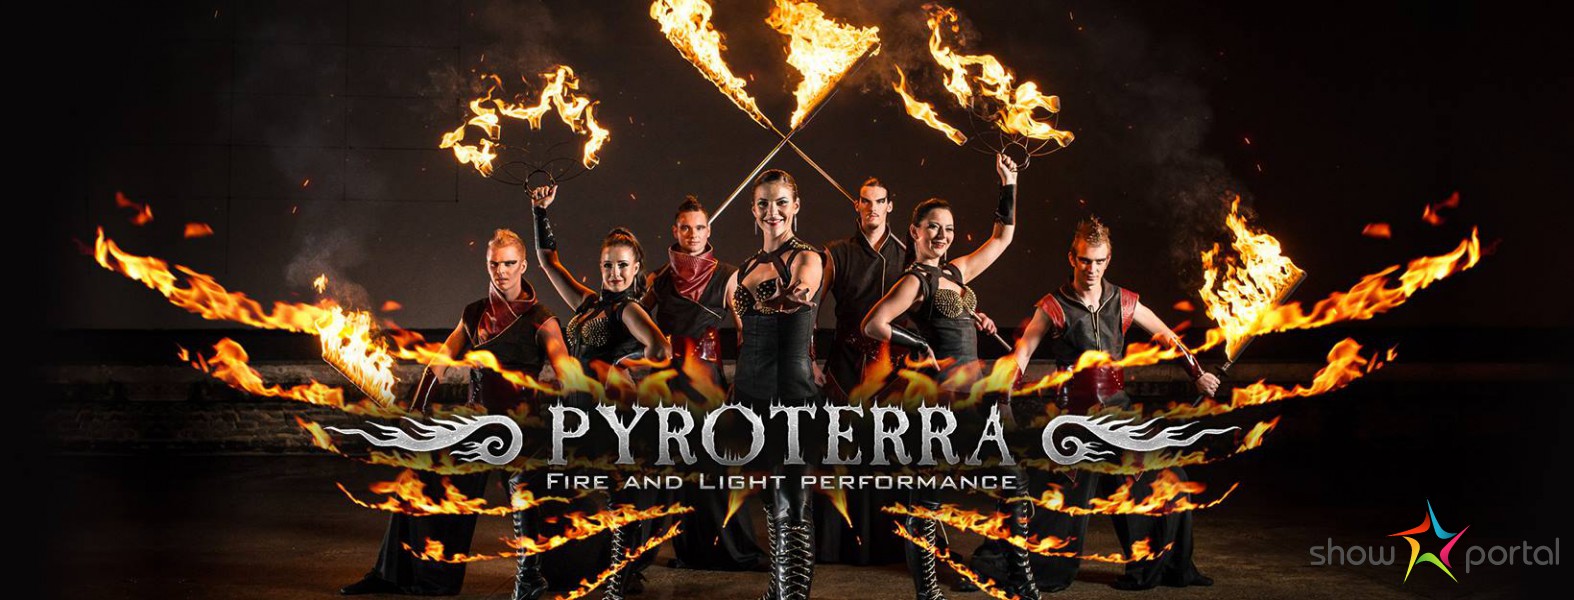 Pyroterra Fireshow